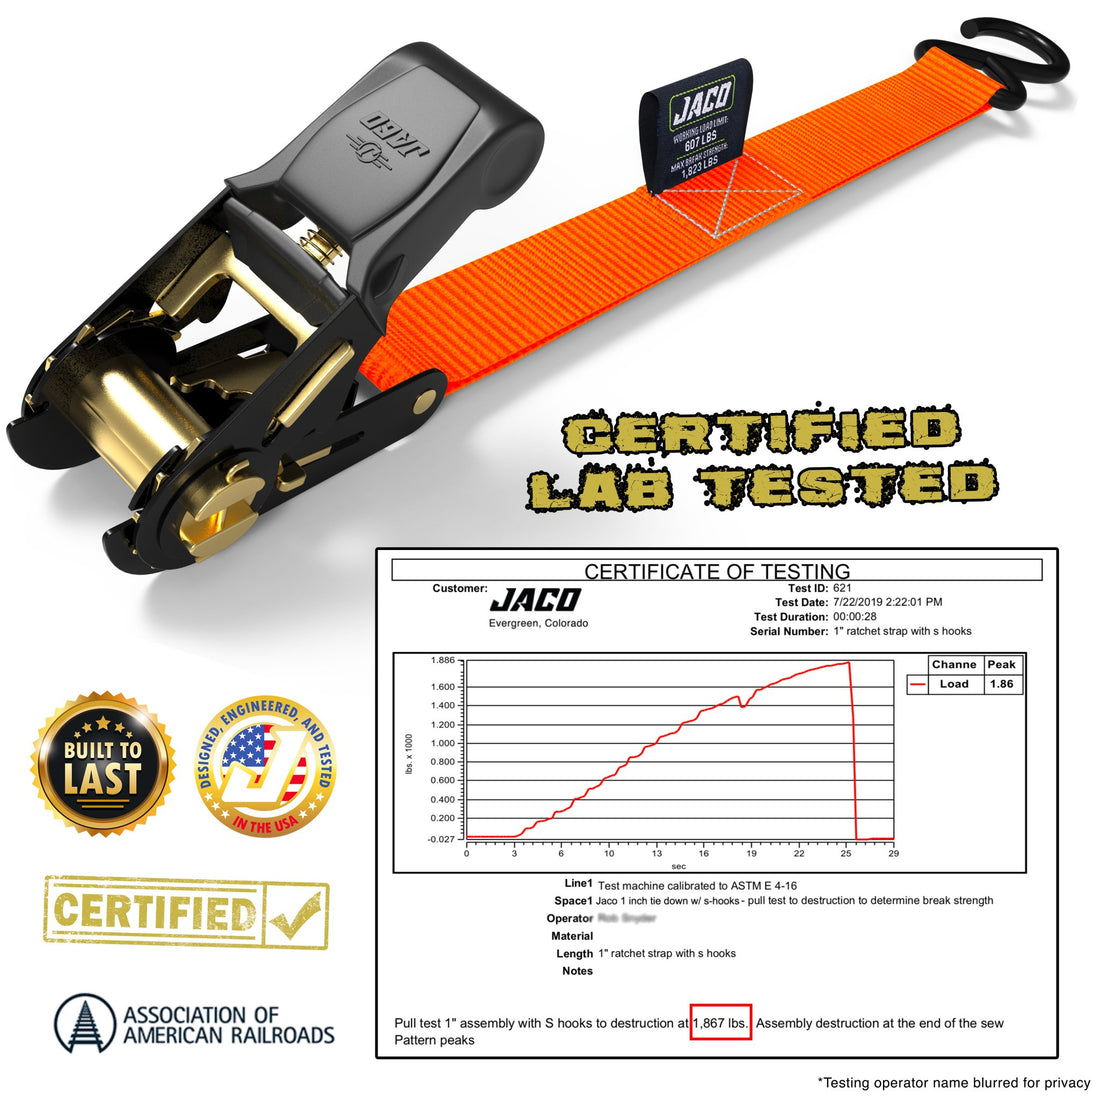 Tie Down Ratchet Straps (4 Pack) 1 in x 15 ft | AAR Certified Break Strength (1,823 lbs) | Cargo Tie Down Set - Diesel Freak